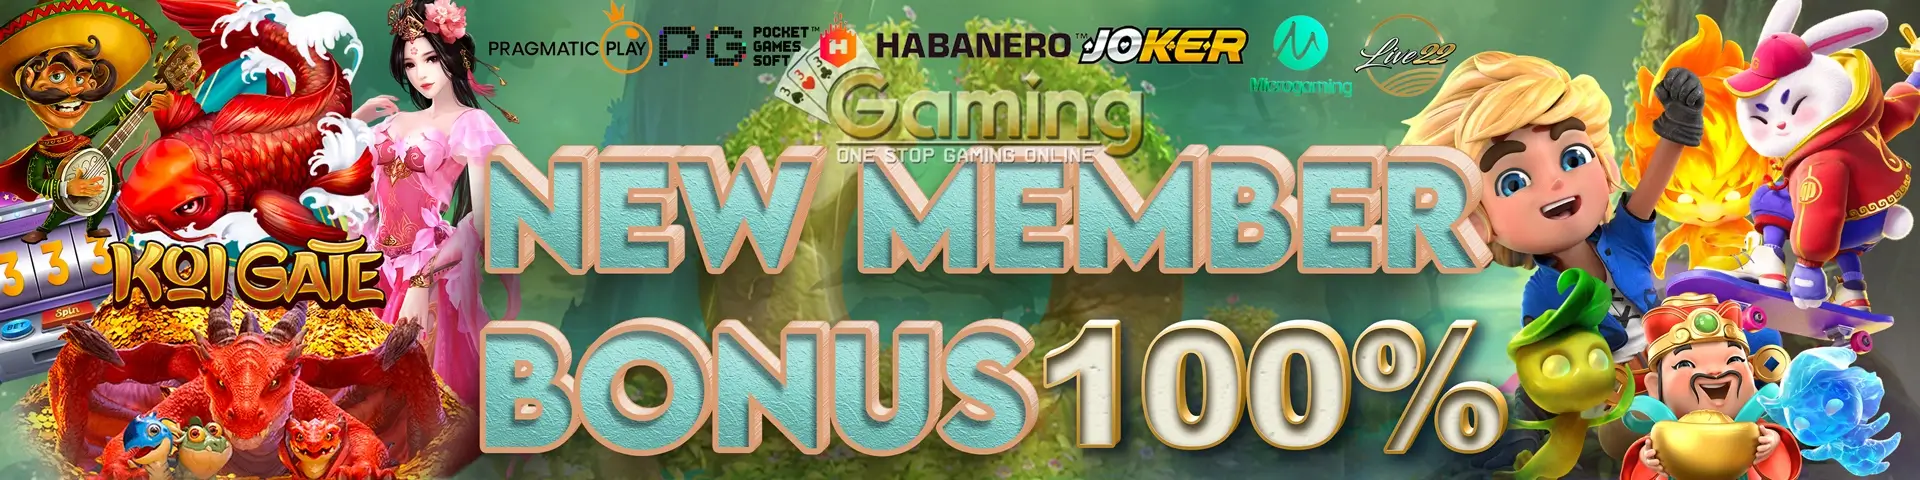 bonus new member 100%